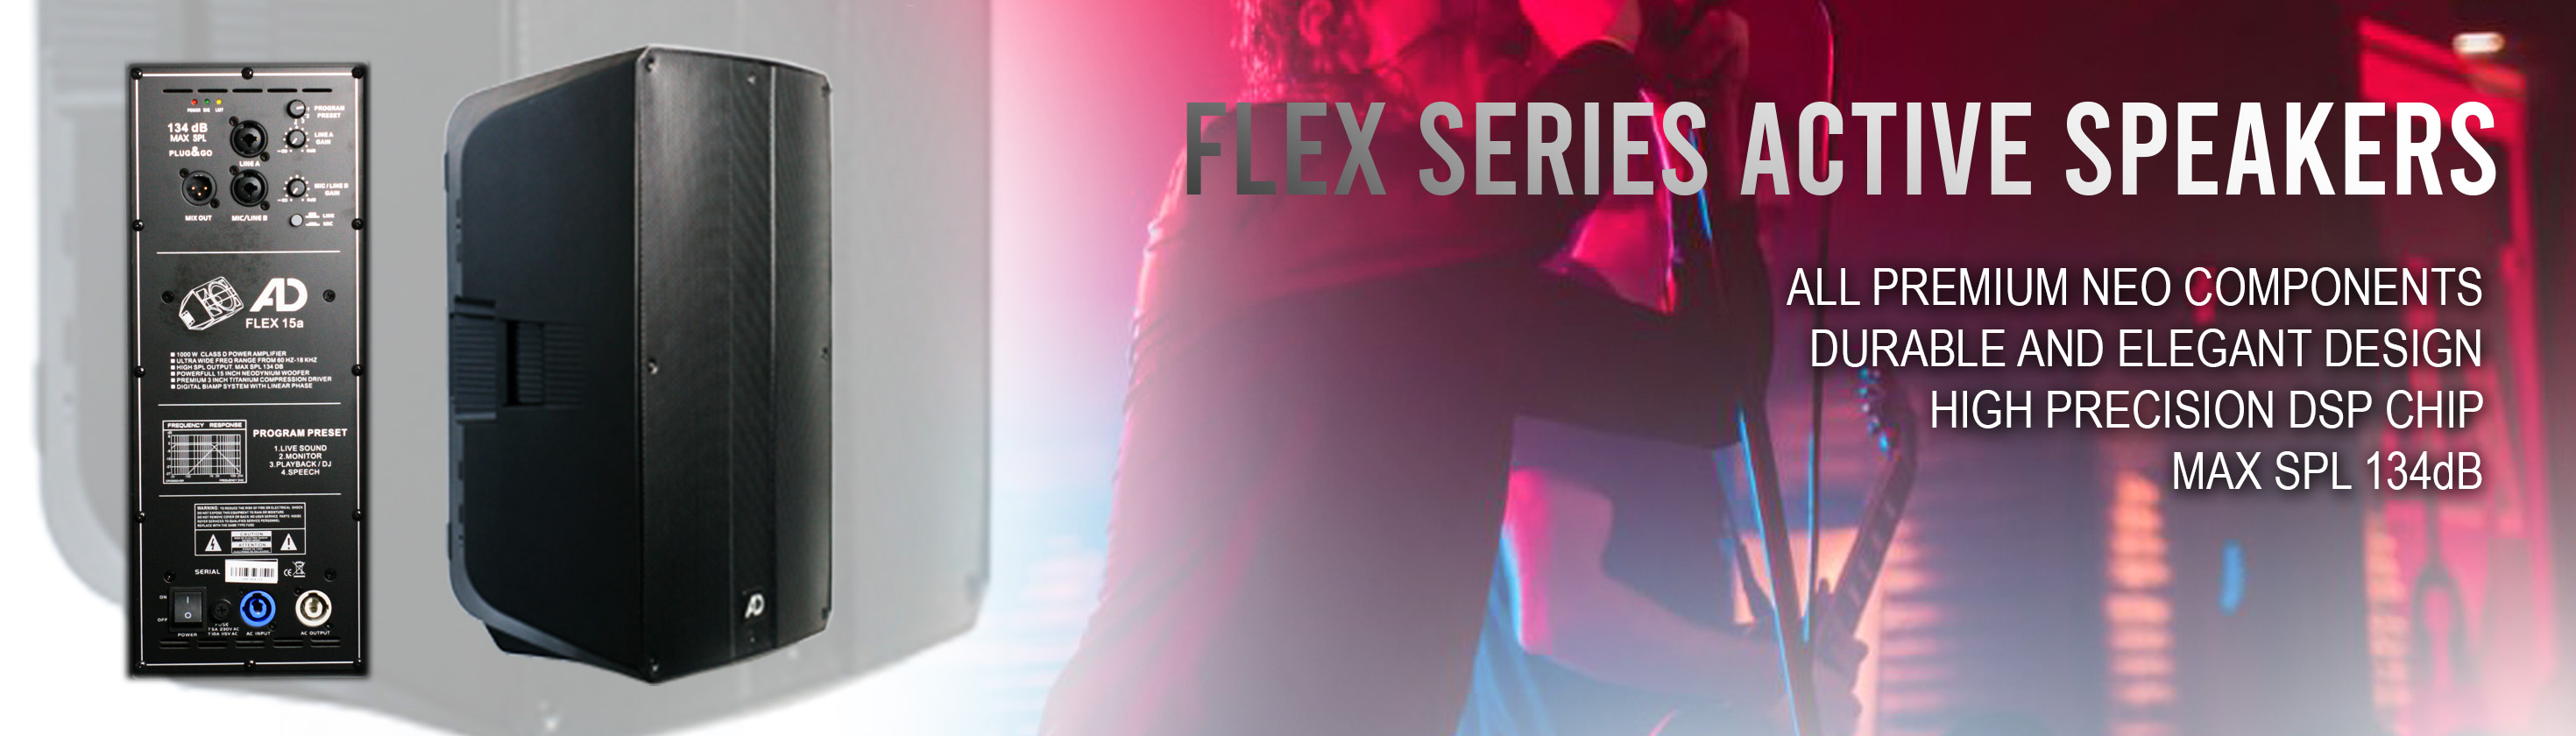 AD Flex Series